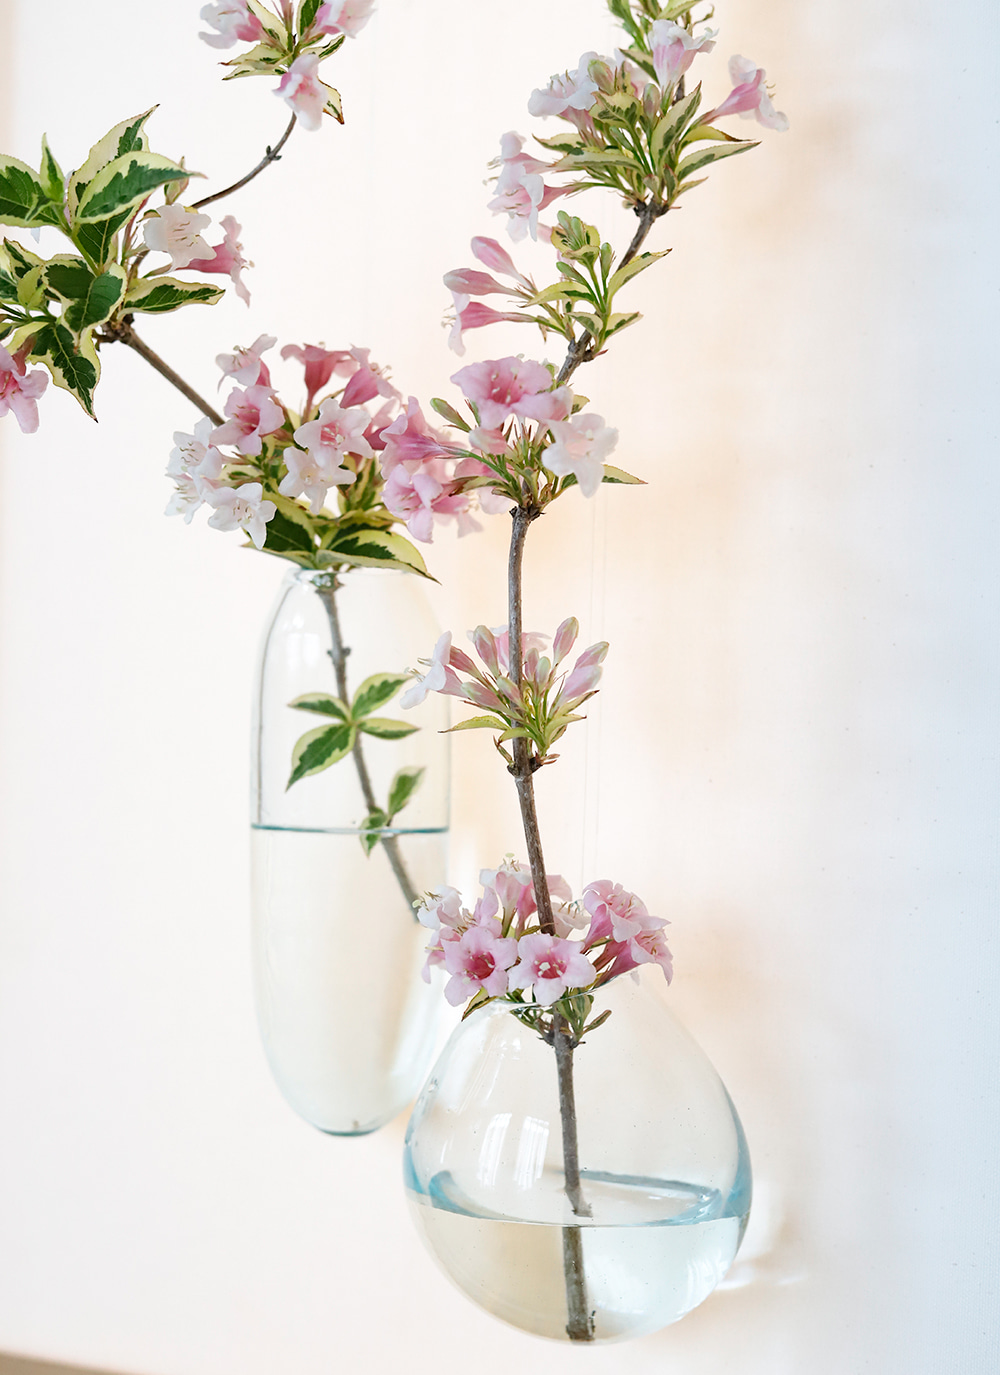 Set of 2 Water droplet Vases